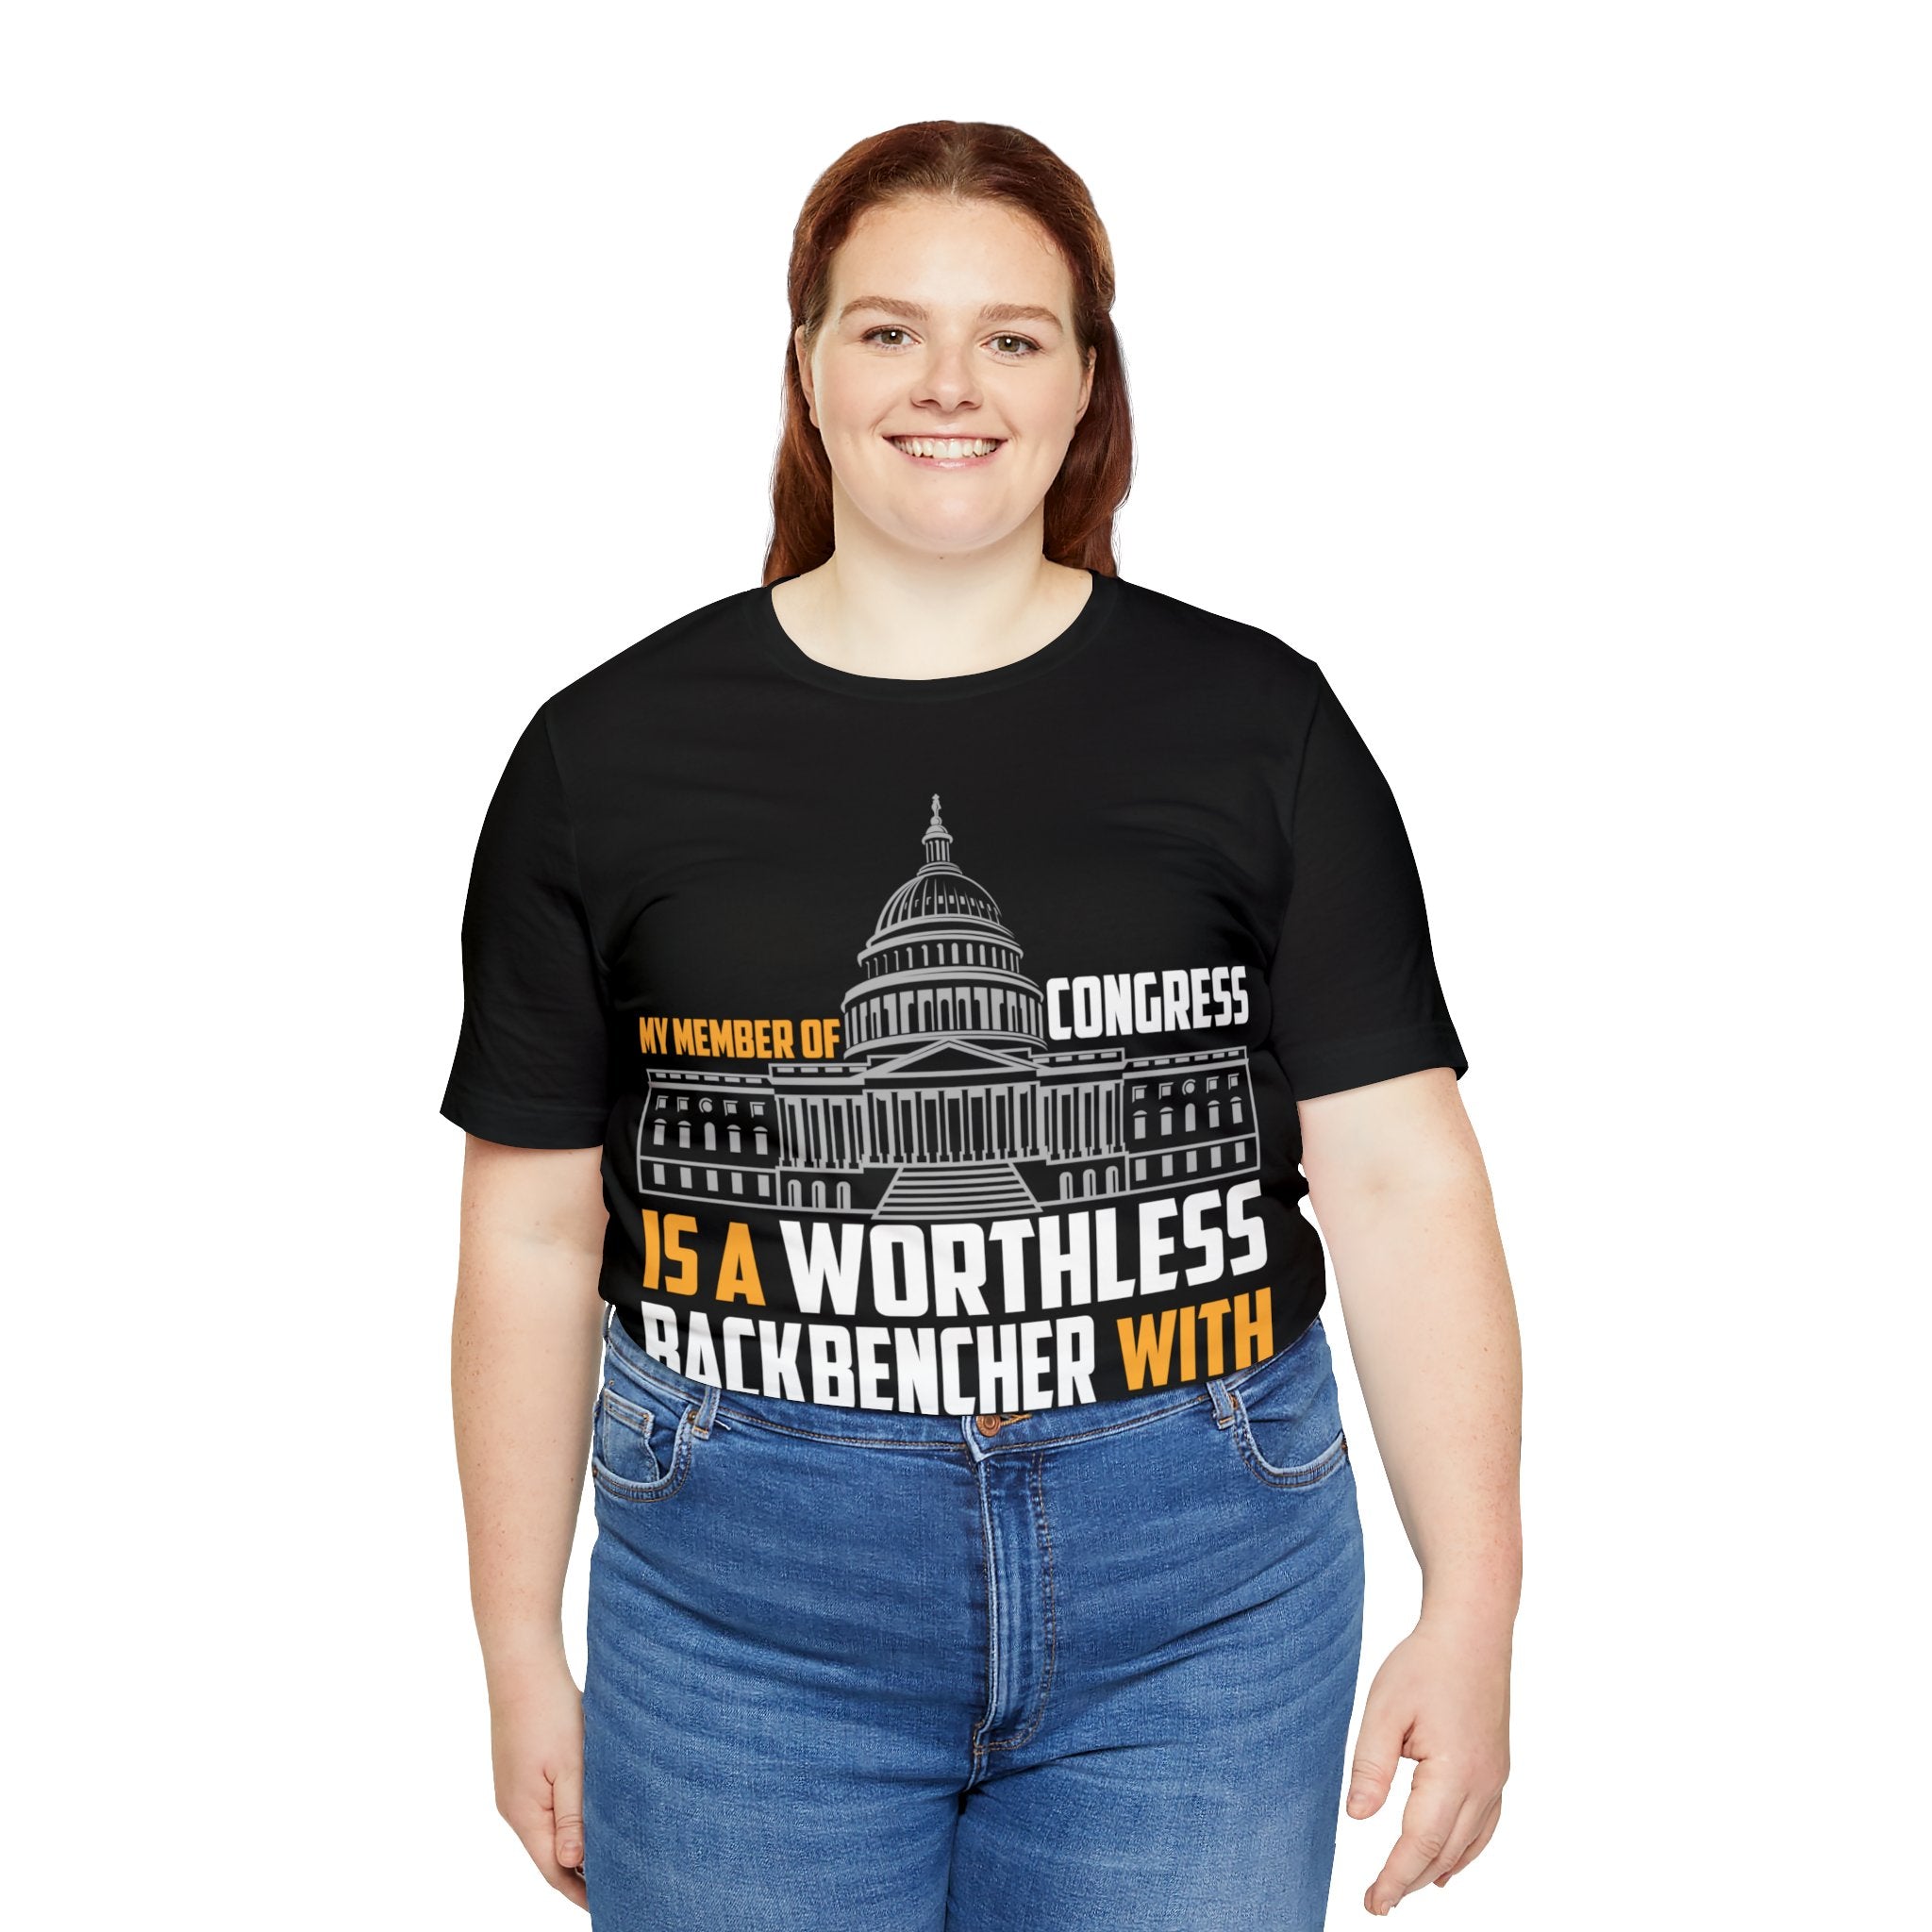 Worthless Backbencher - Congress